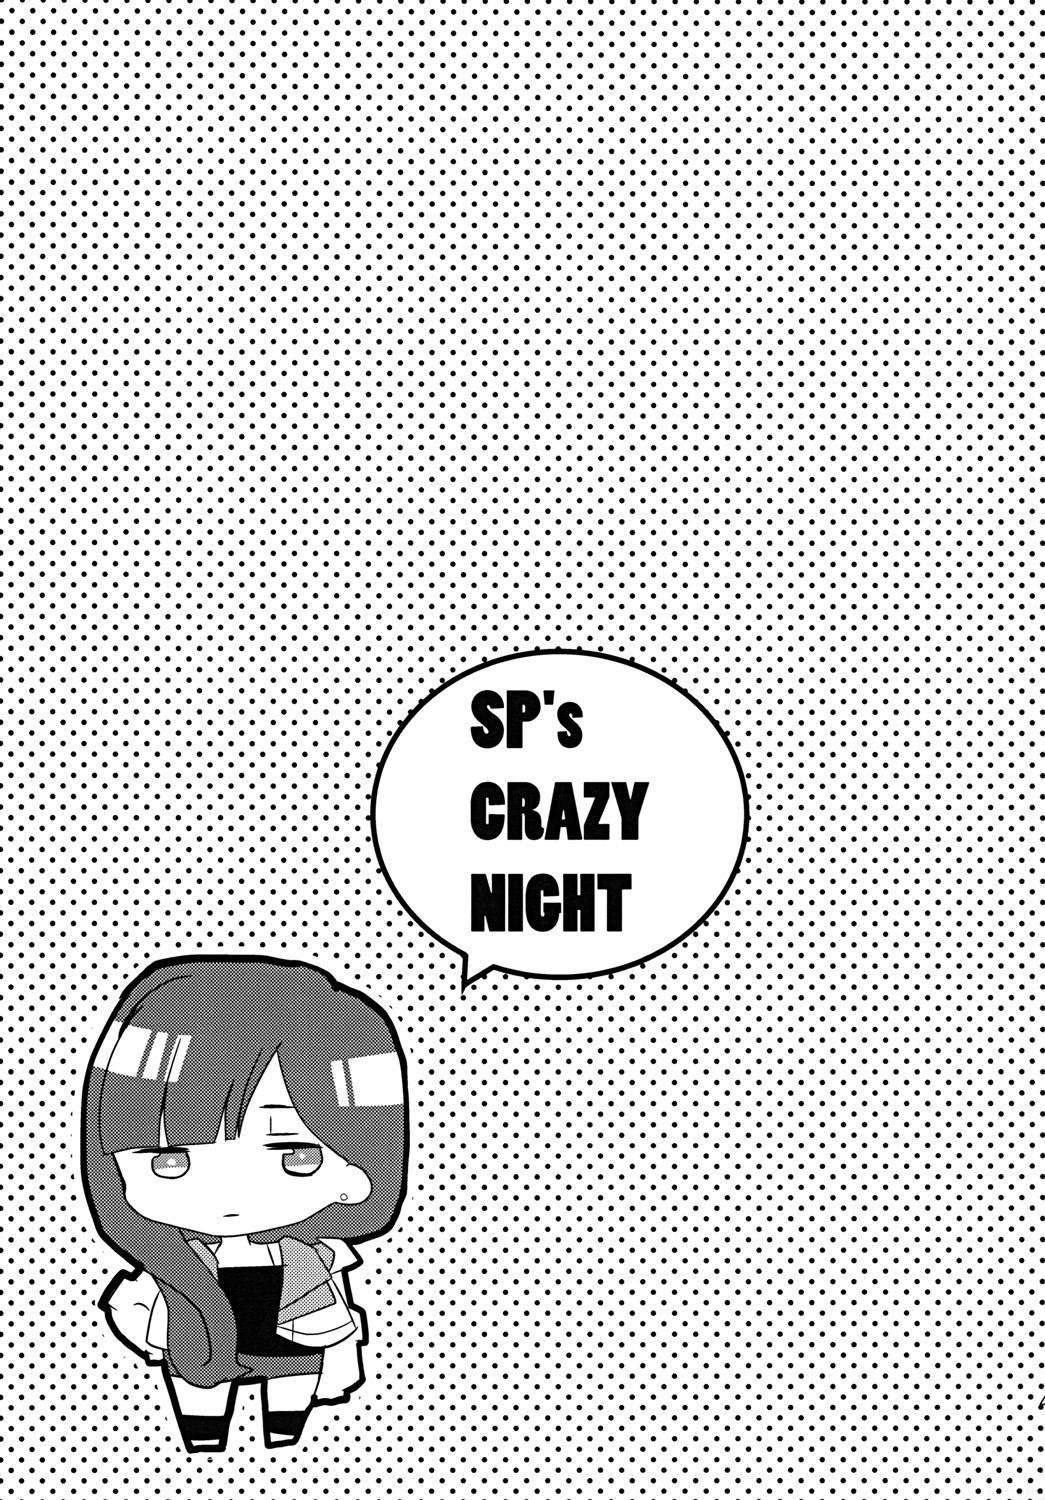 SP's CRAZY NIGHT 38